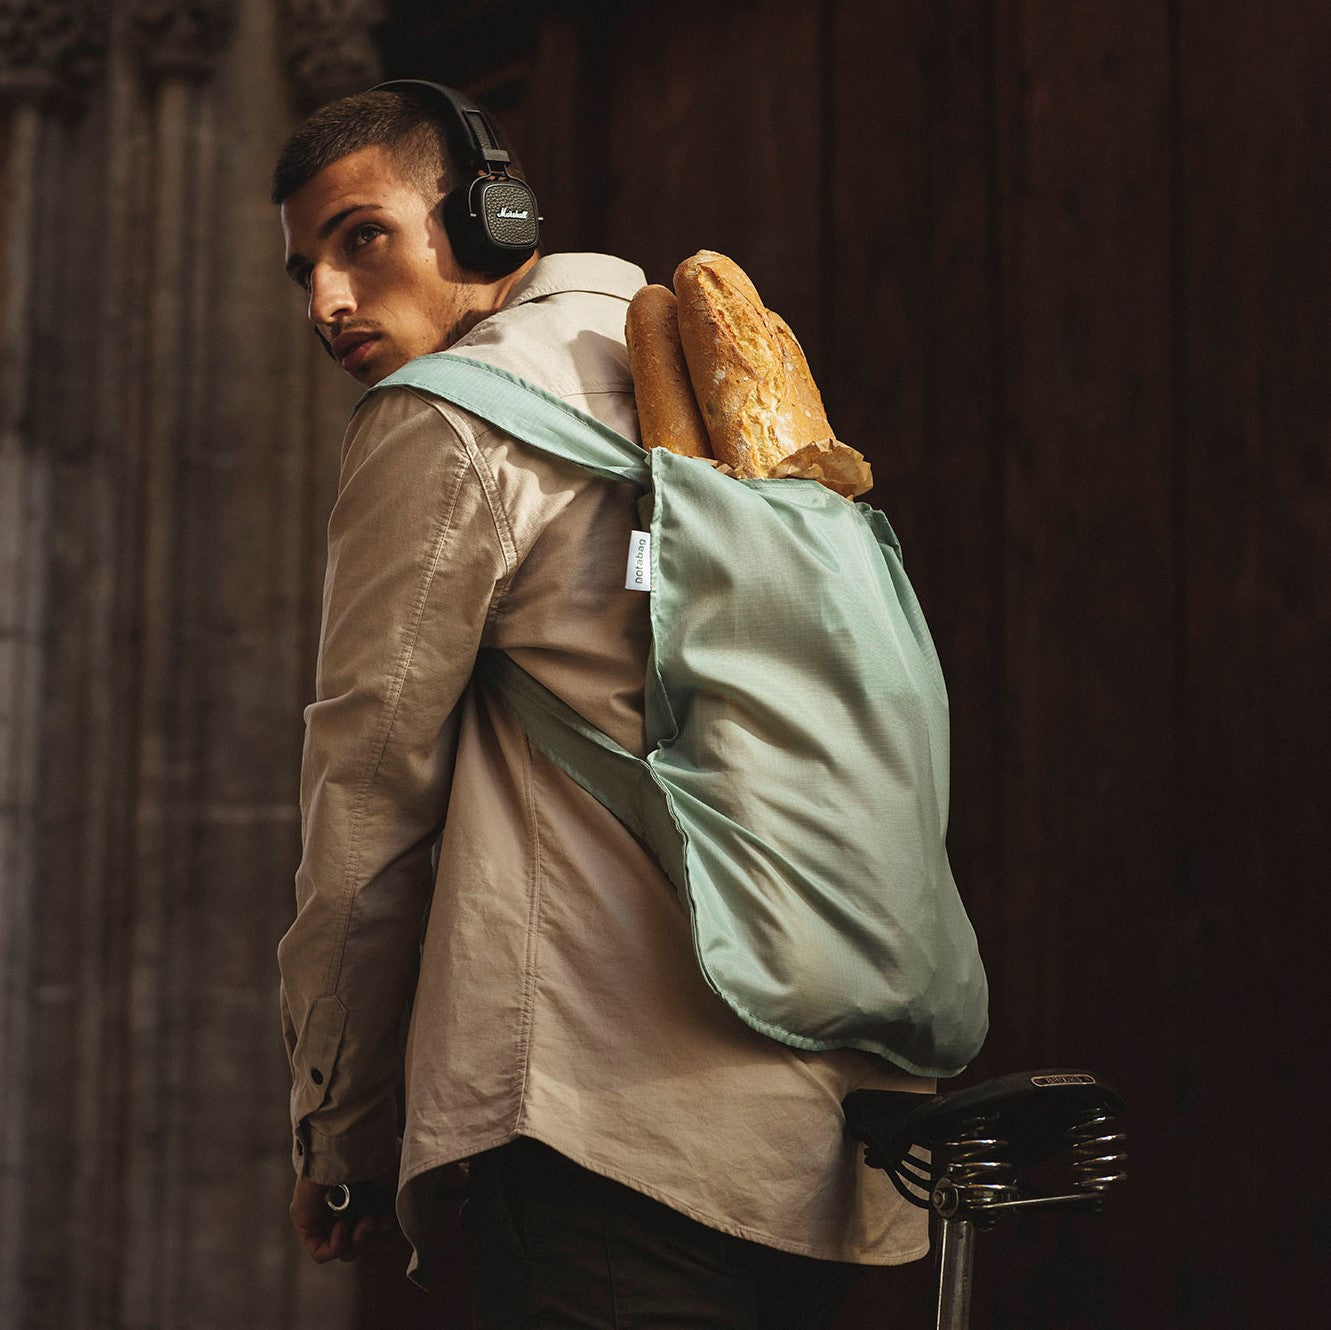 Notabag - Backpack & Handbag - Recycled Collection - Sage